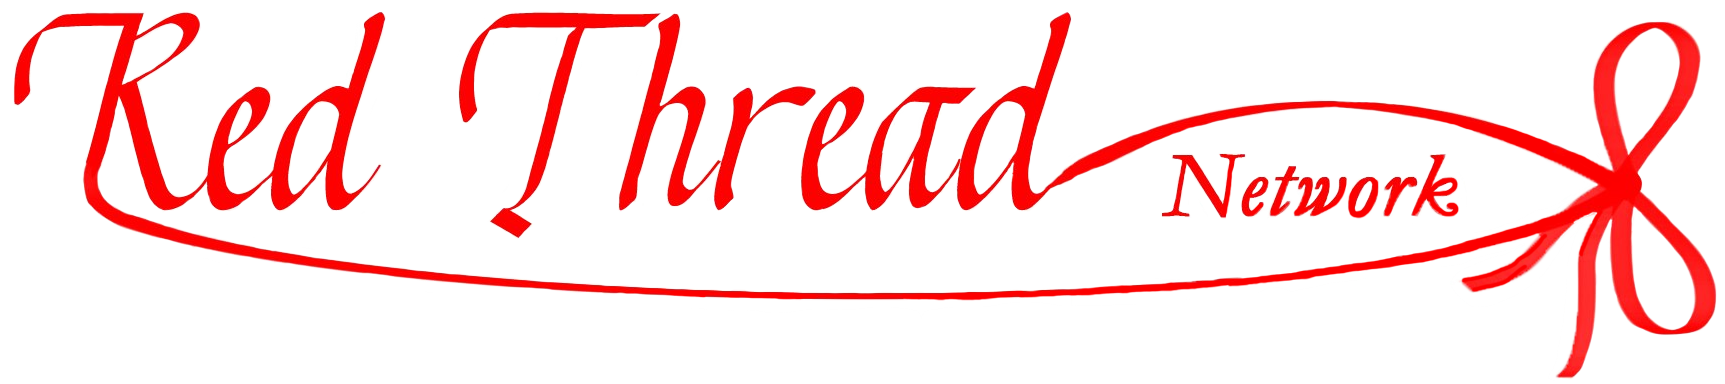 Red Thread Network banner